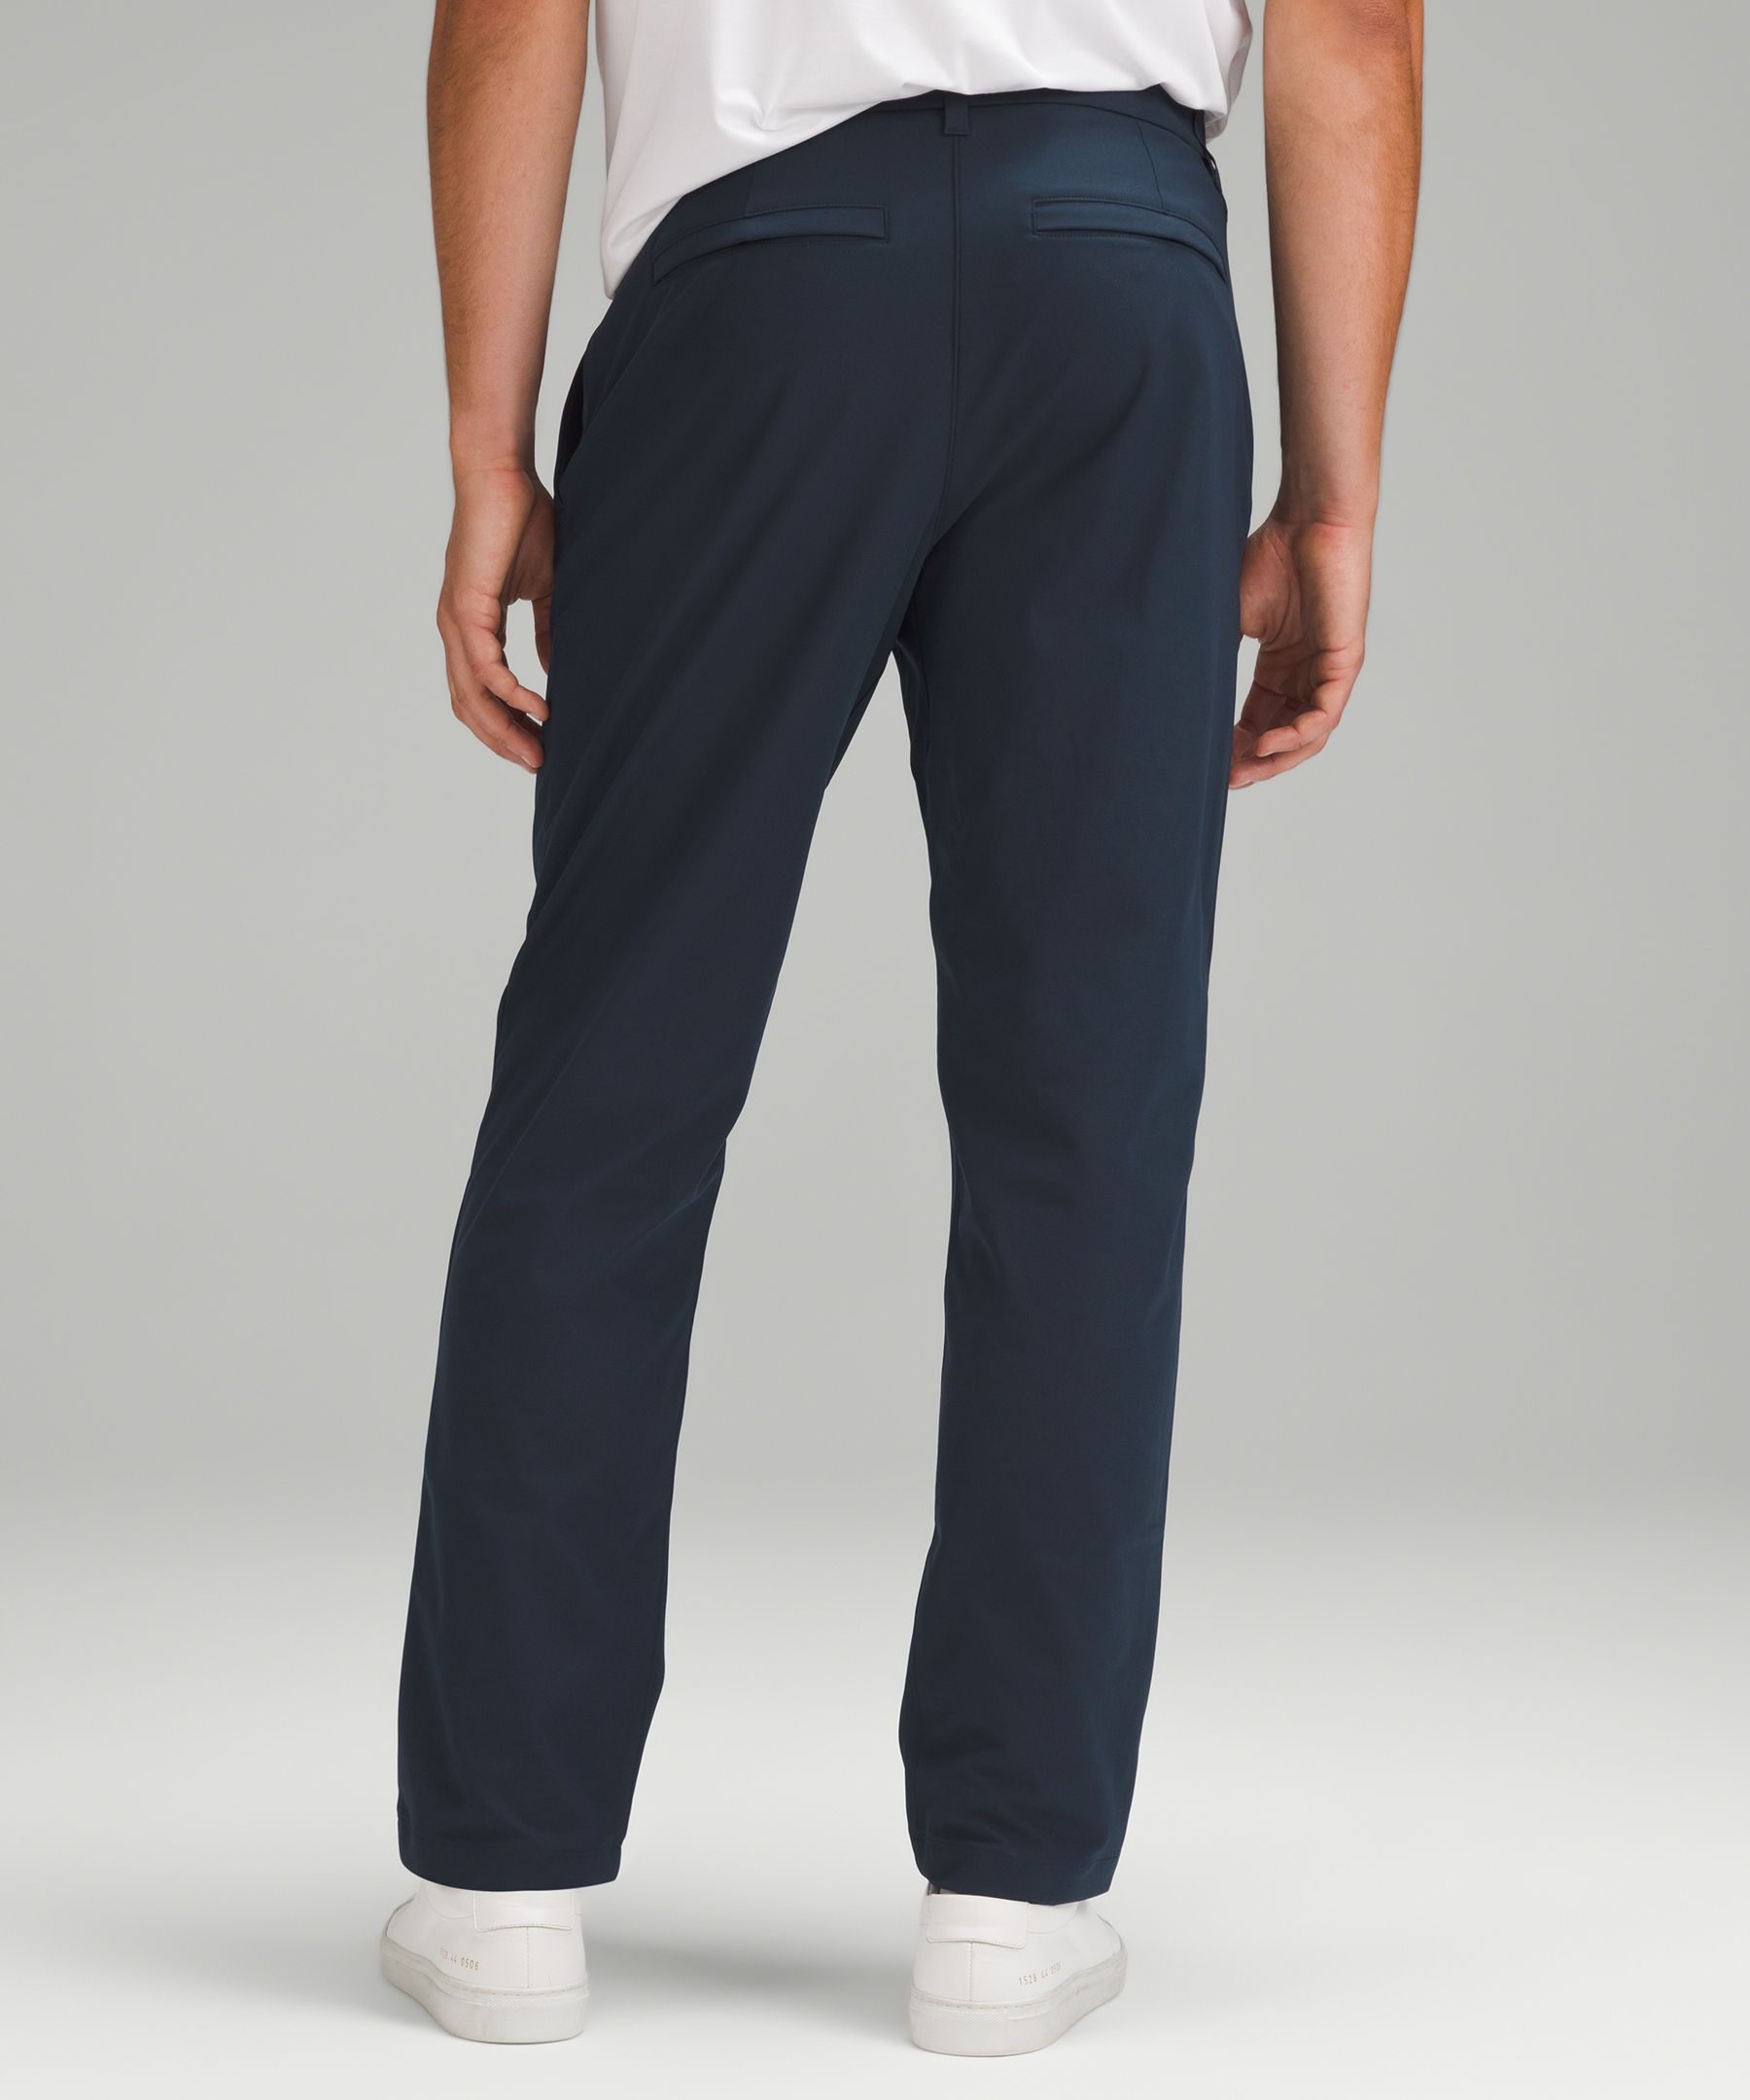 ABC Relaxed-Fit Trouser 32L *Warpstreme, Men's Trousers